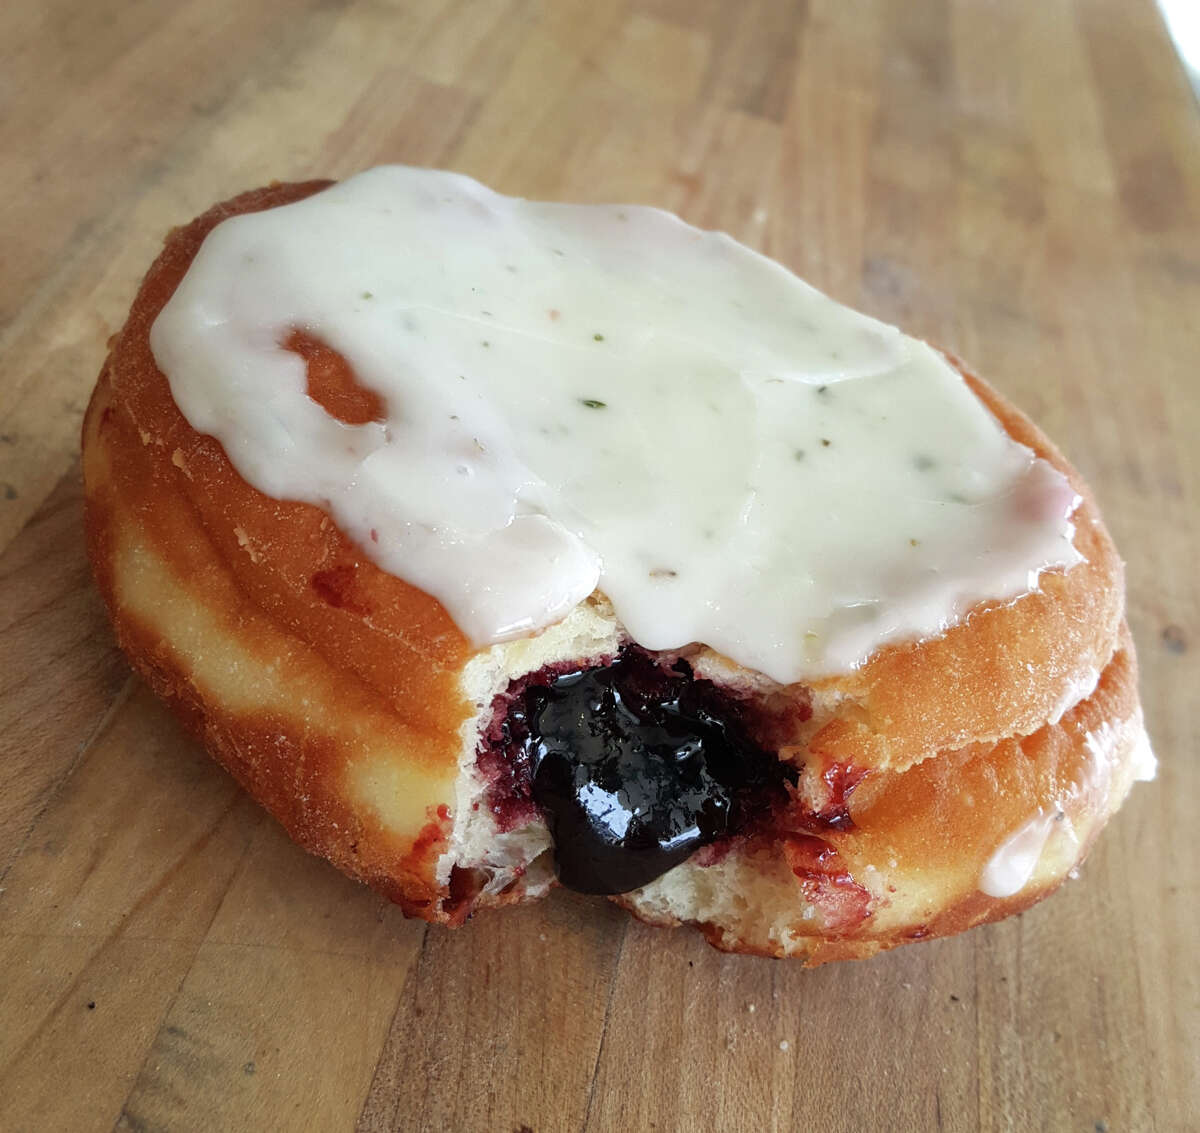 Blackberry jam lemon meyers donut made at Nomad Donuts in San Diego.